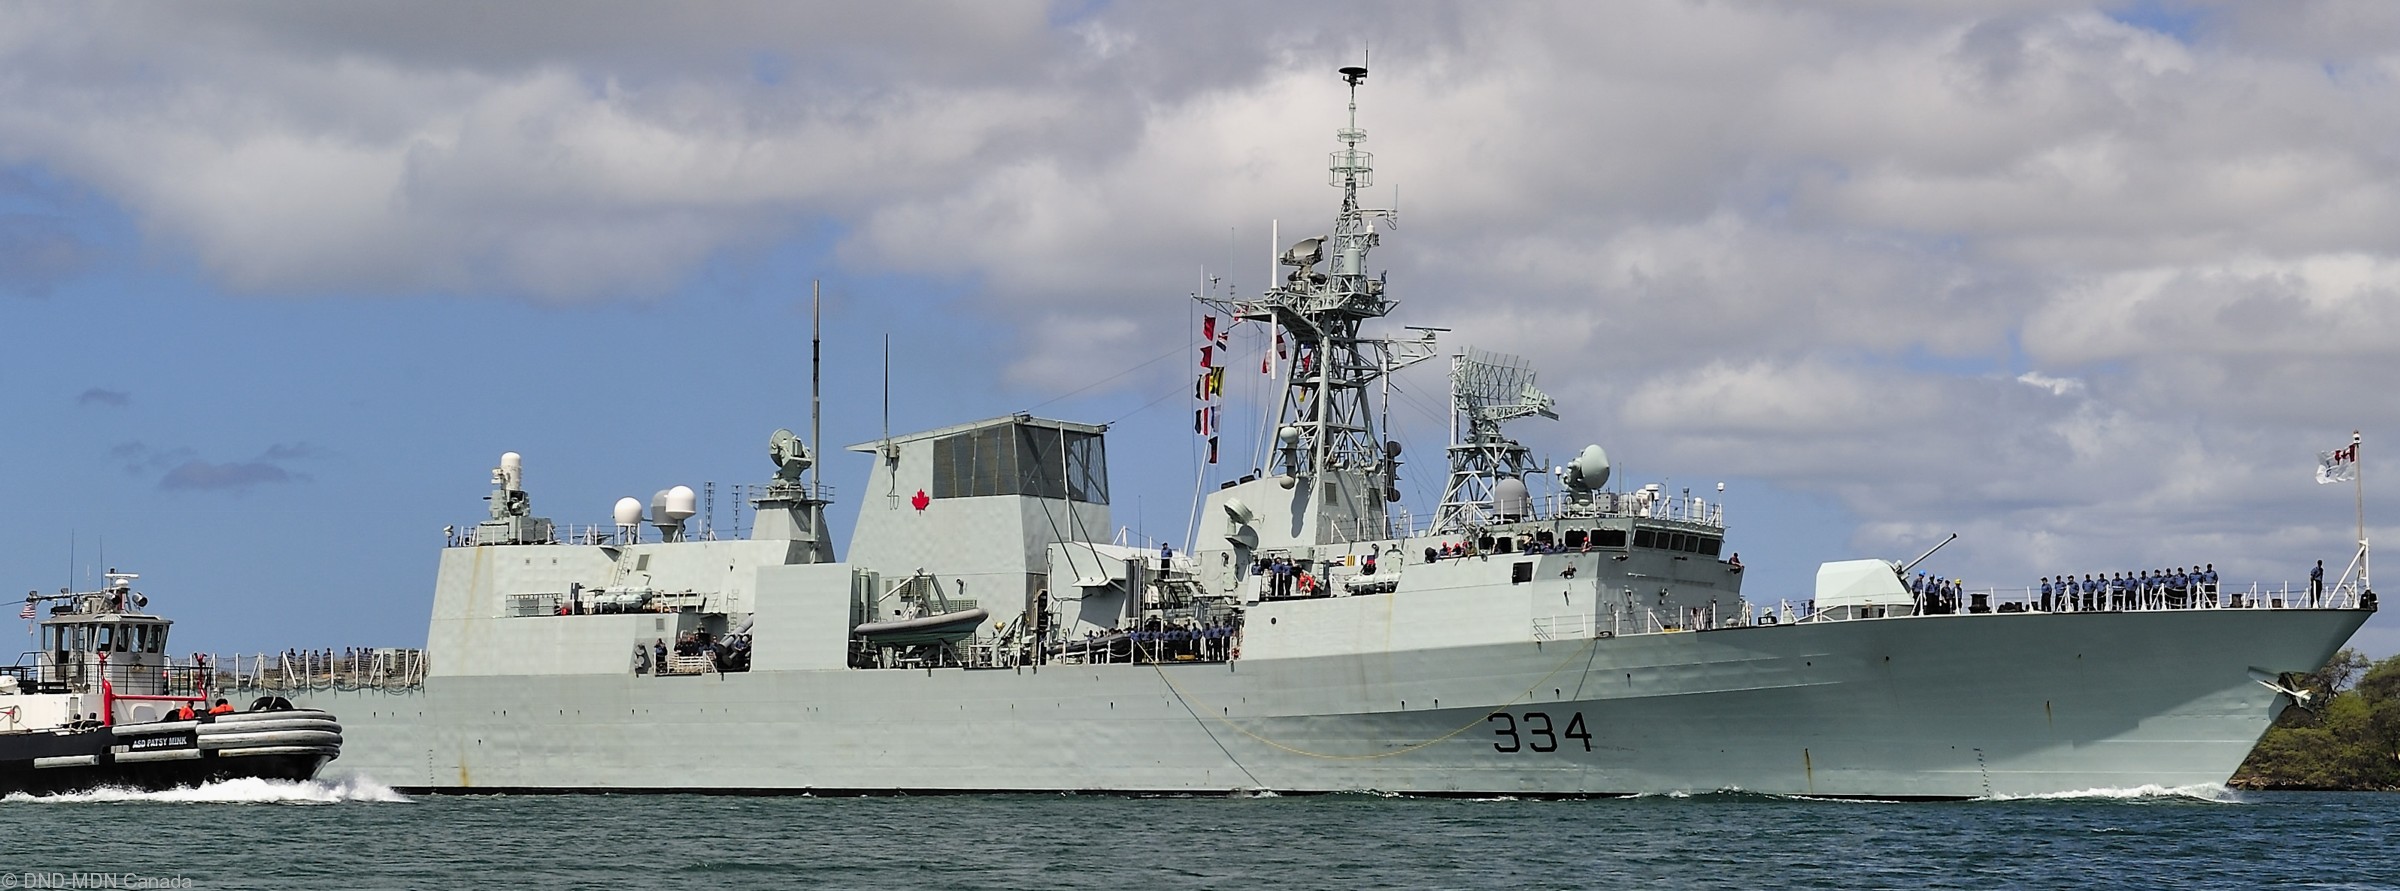 ffh-334 hmcs regina halifax class helicopter patrol frigate ncsm royal canadian navy 14